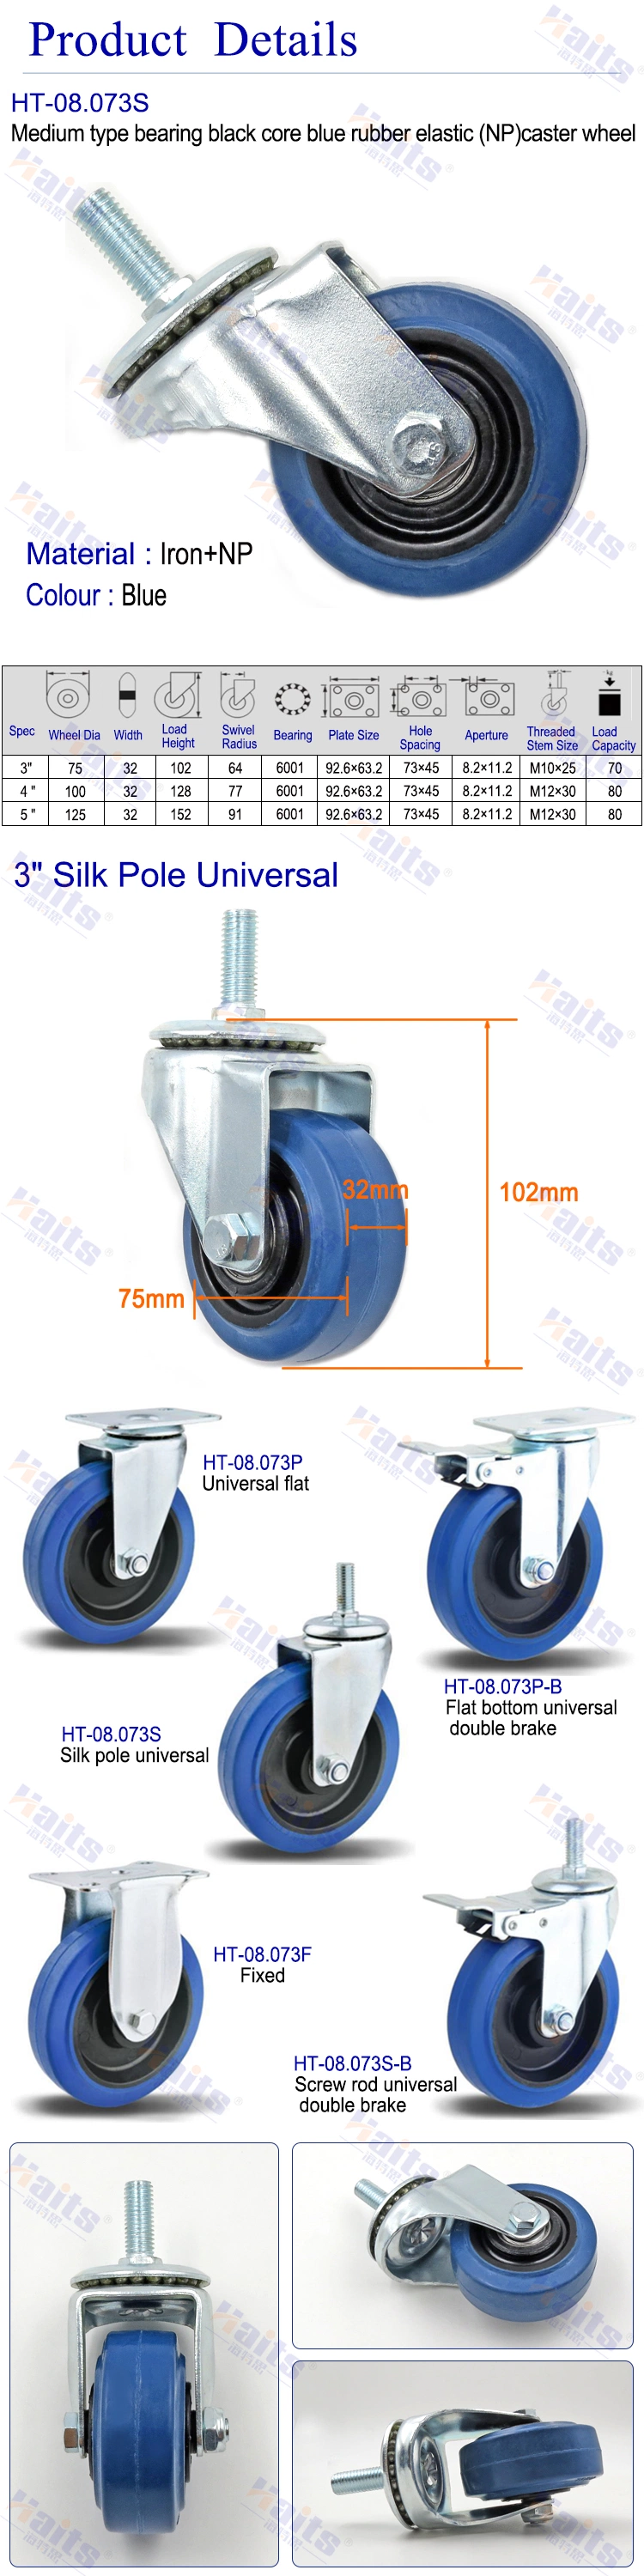 Locking Castor Wheel Heavy Duty Caster Wheels Spring Loaded Furniture ABS Castor Wheels with Brake Hardware